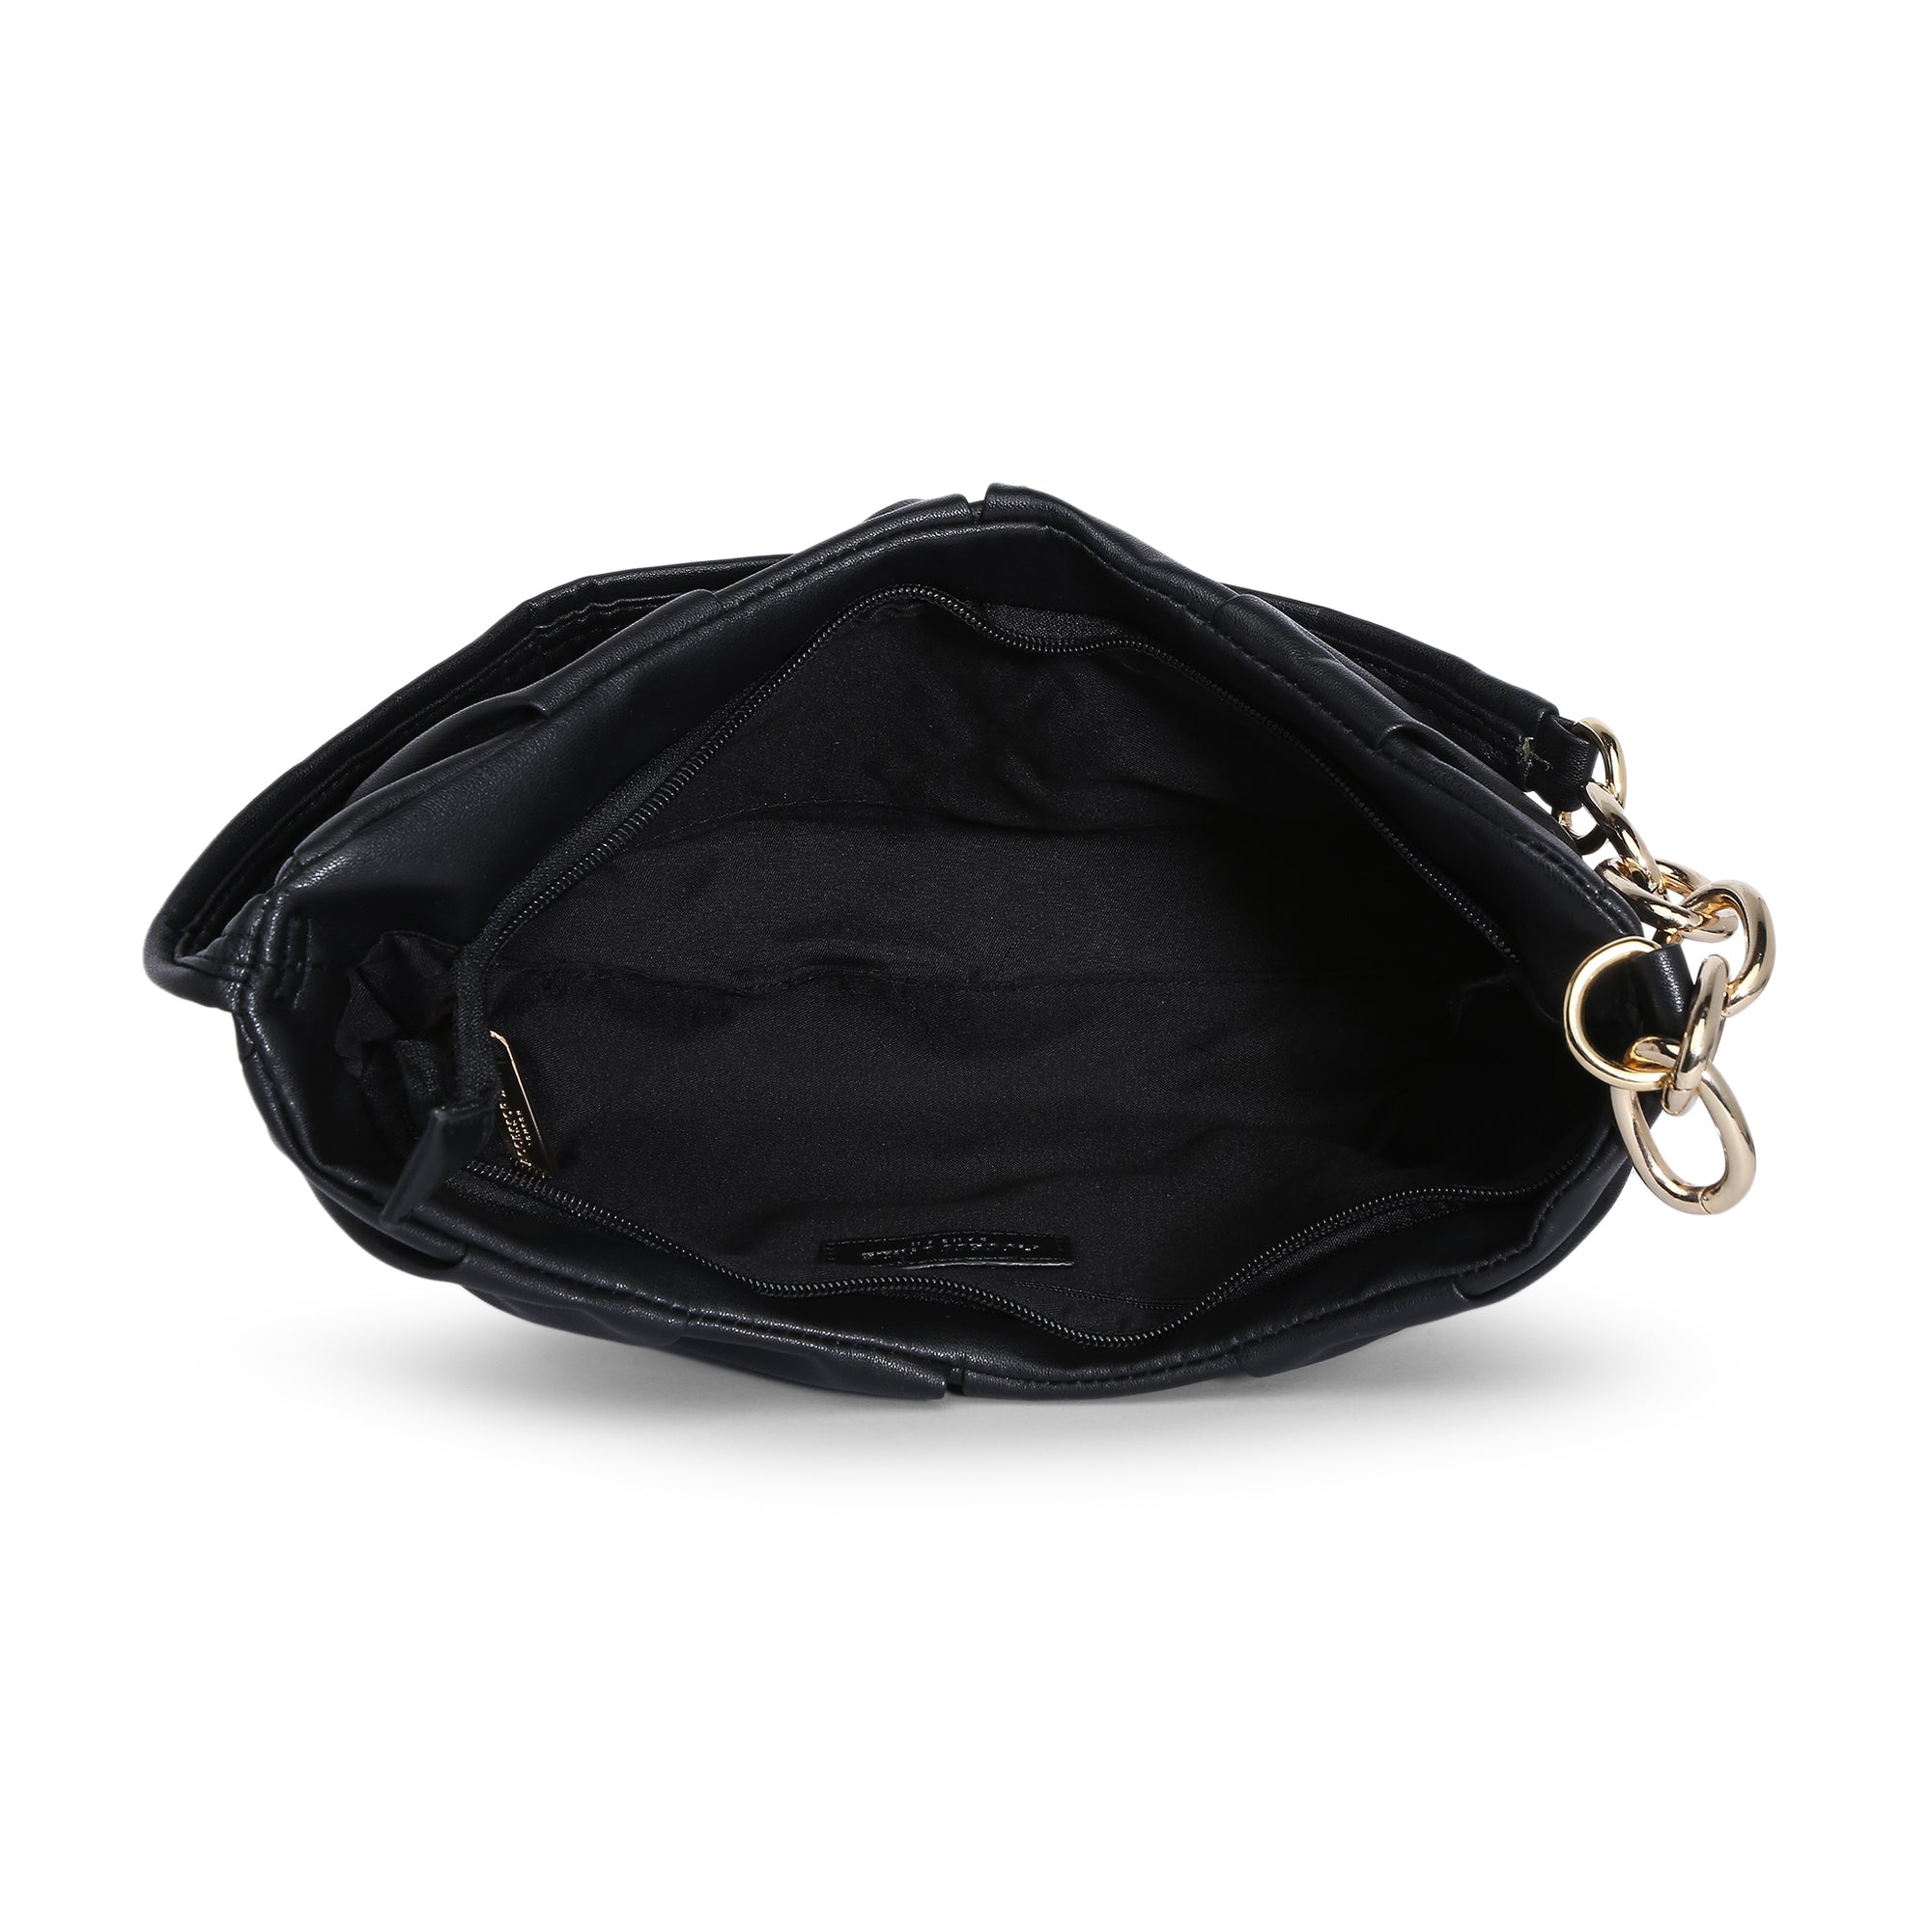 Accessorize London Women's Faux Leather Stella Pleated Chain Shoulder - Black